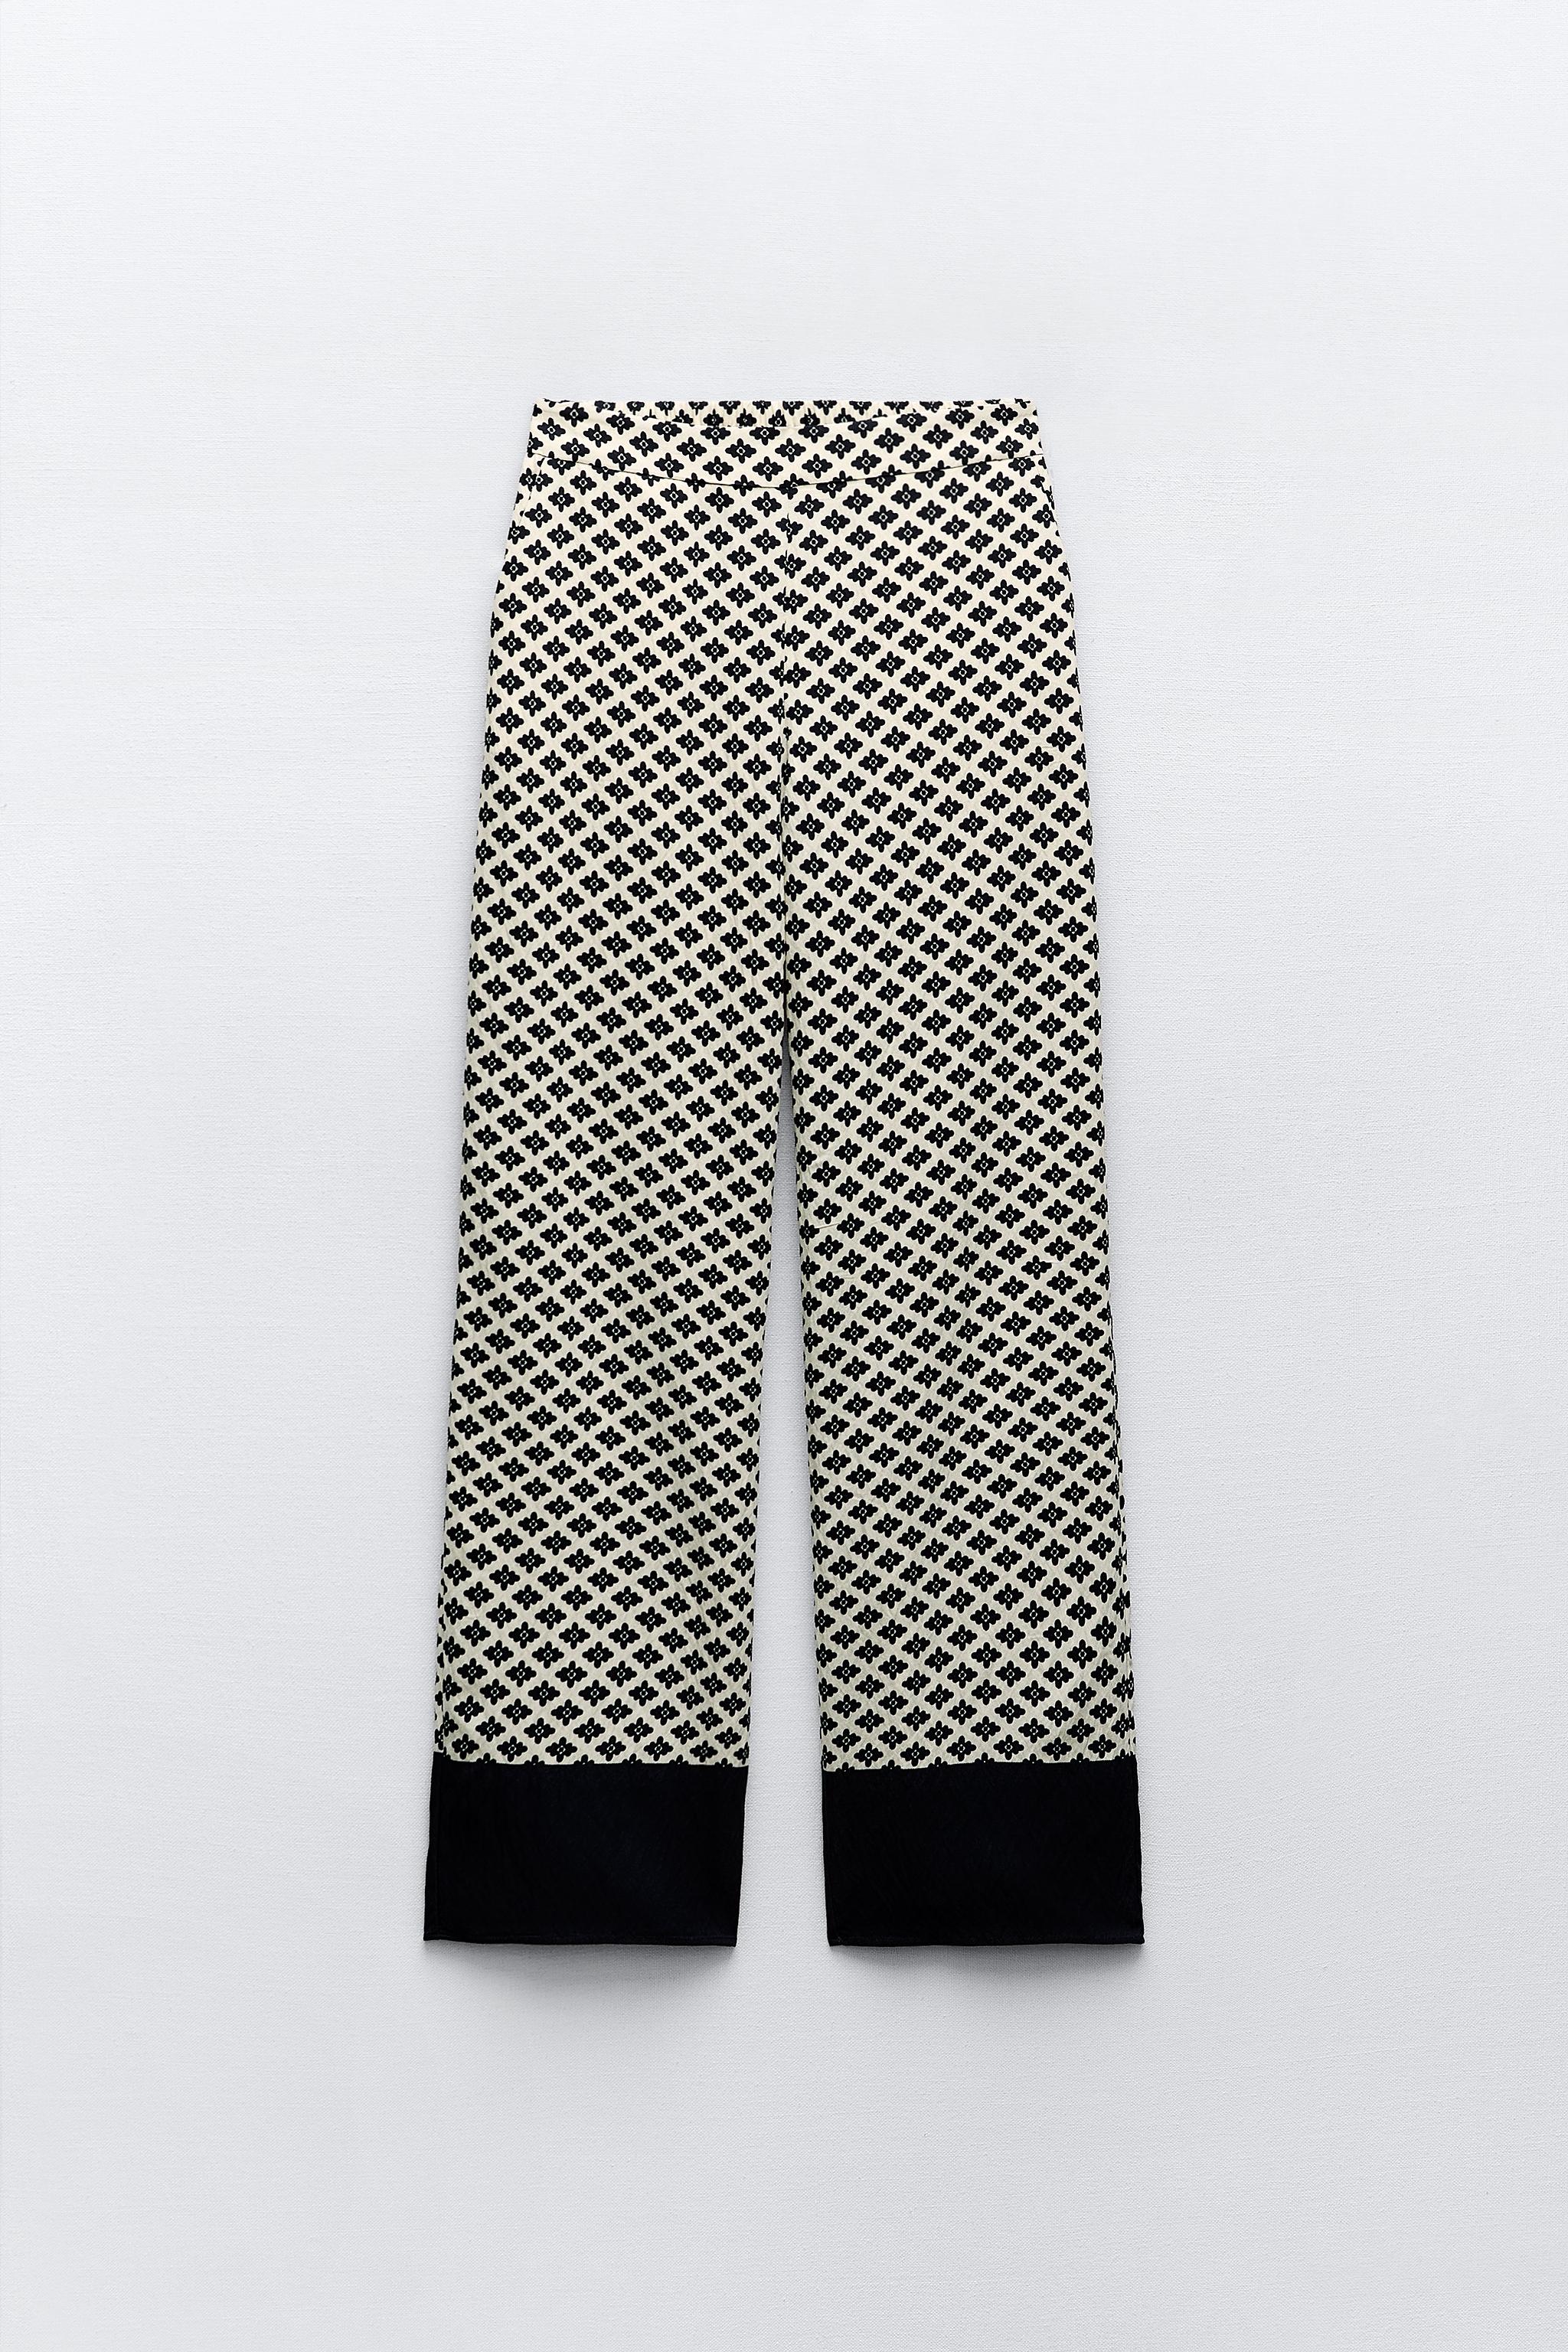 Zara Black Printed Pants